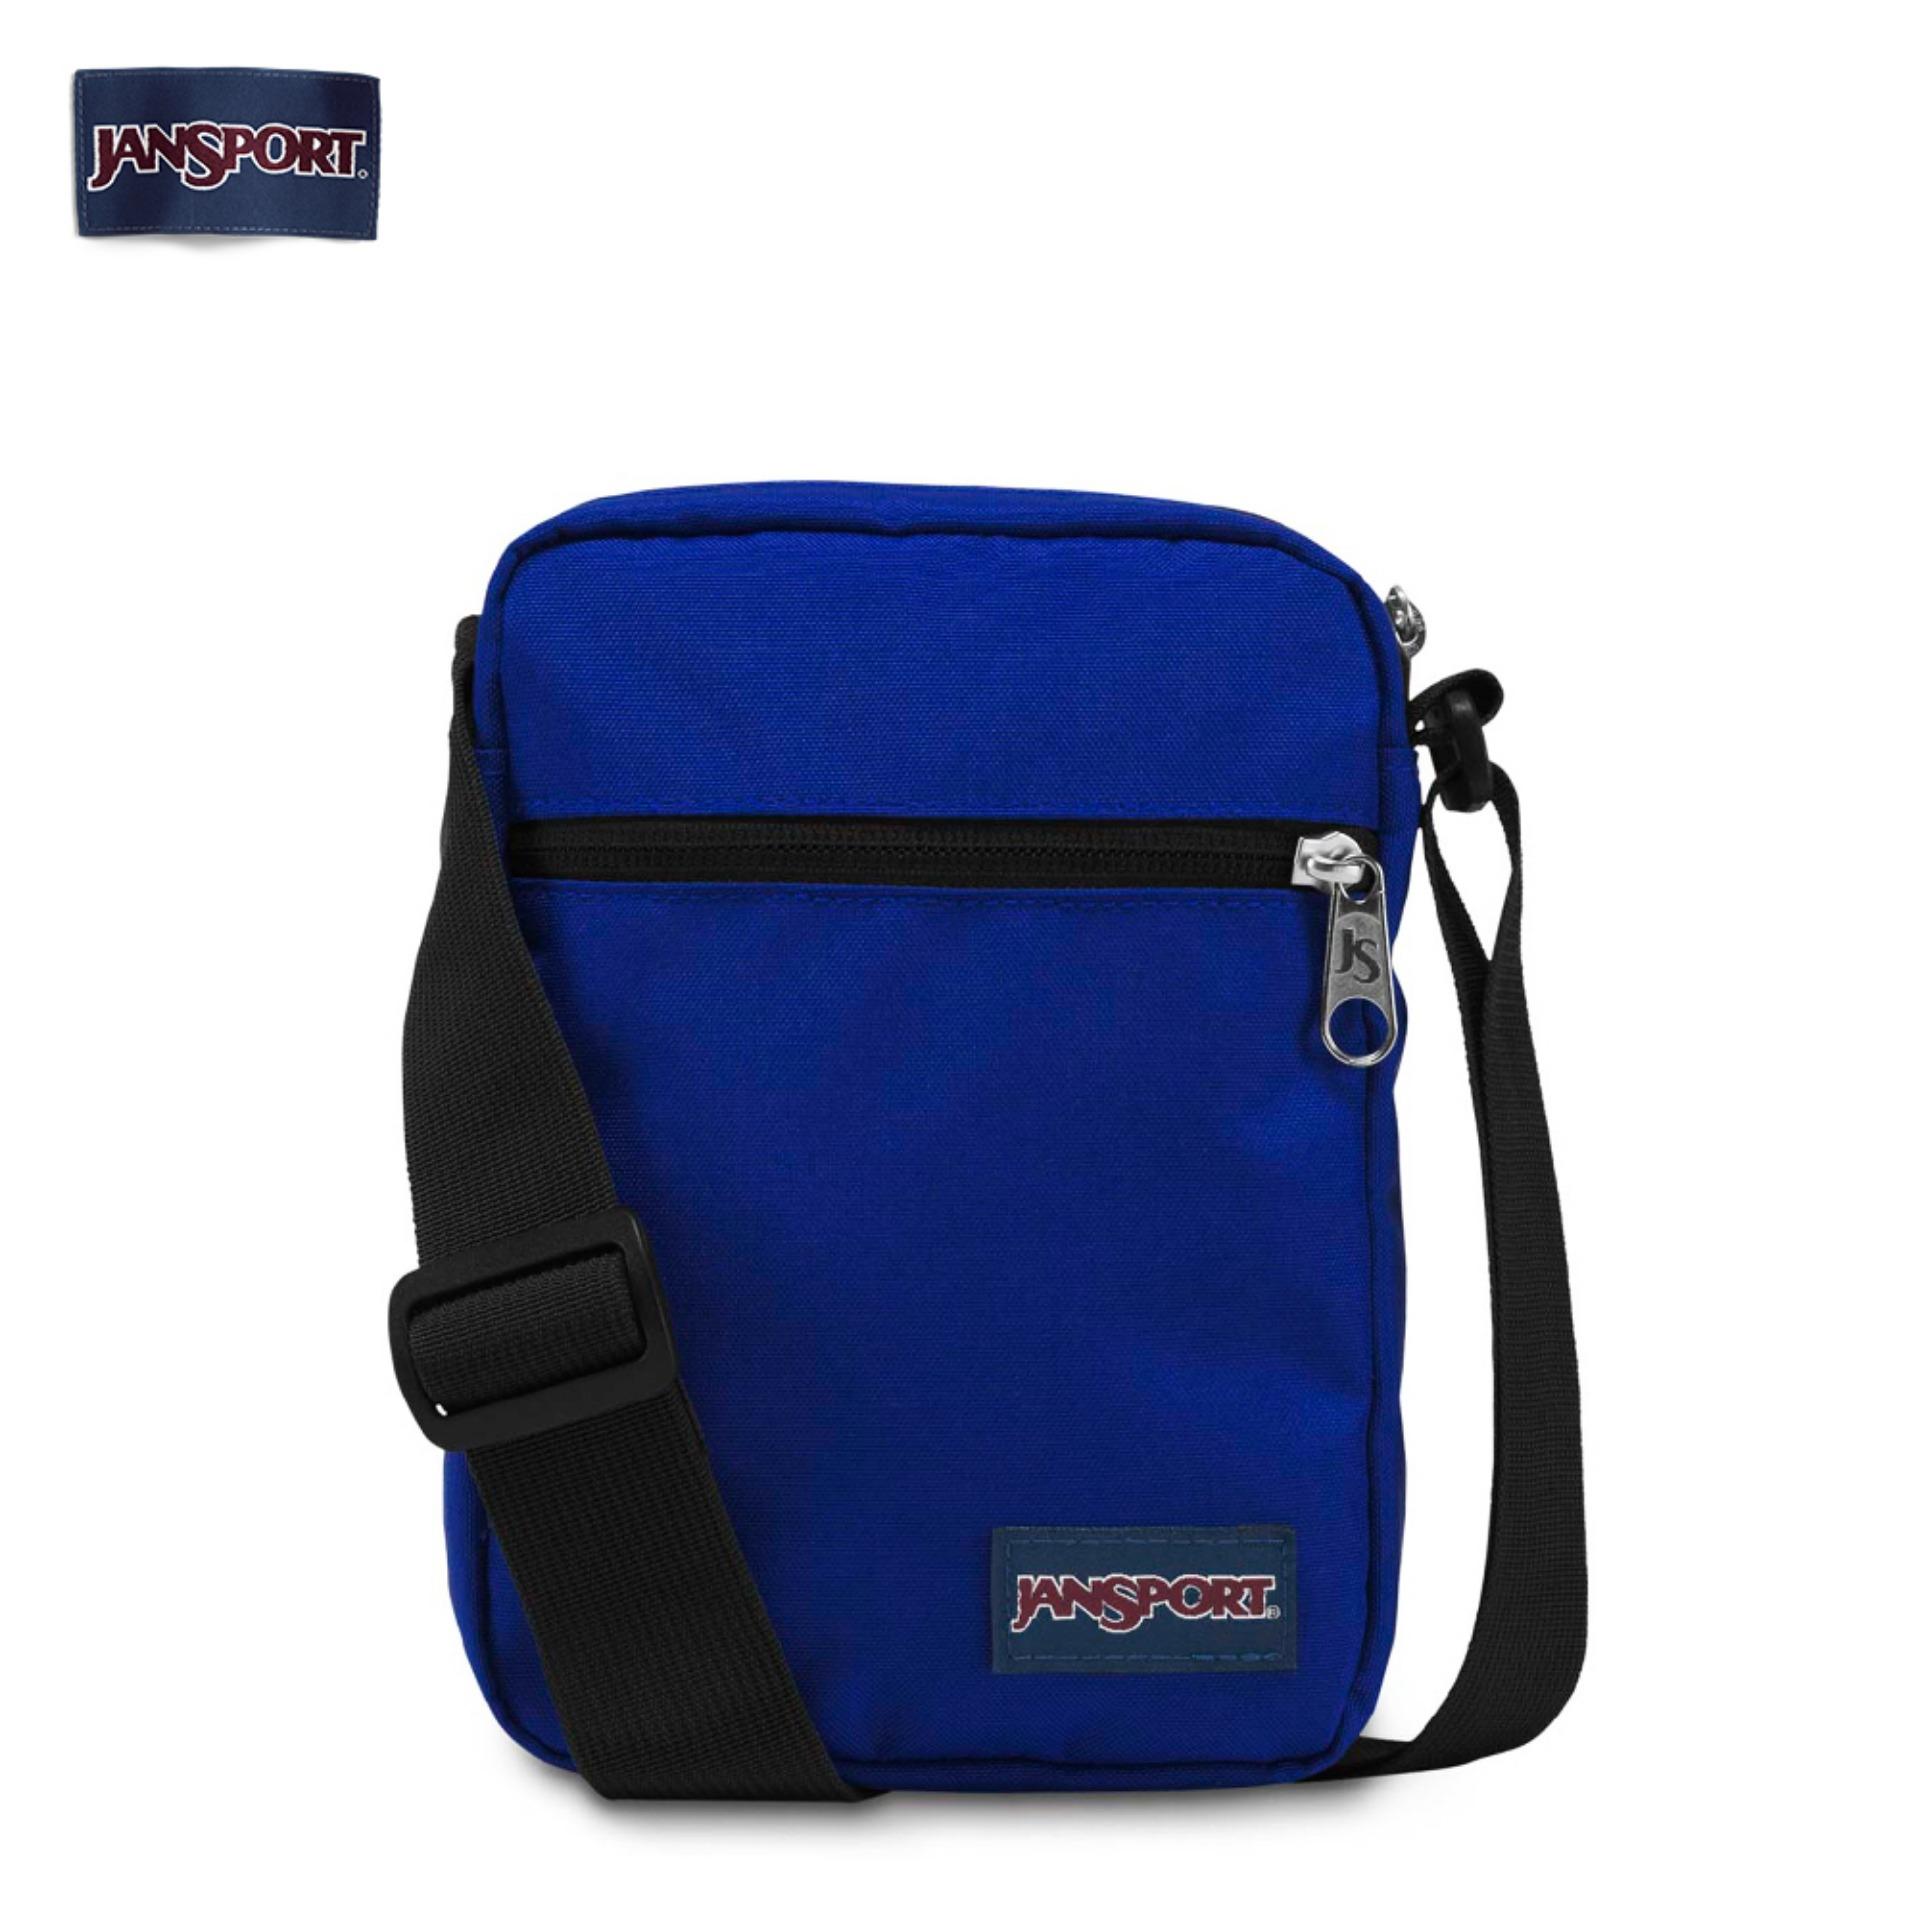 bag: Original Jansport Bag Designs